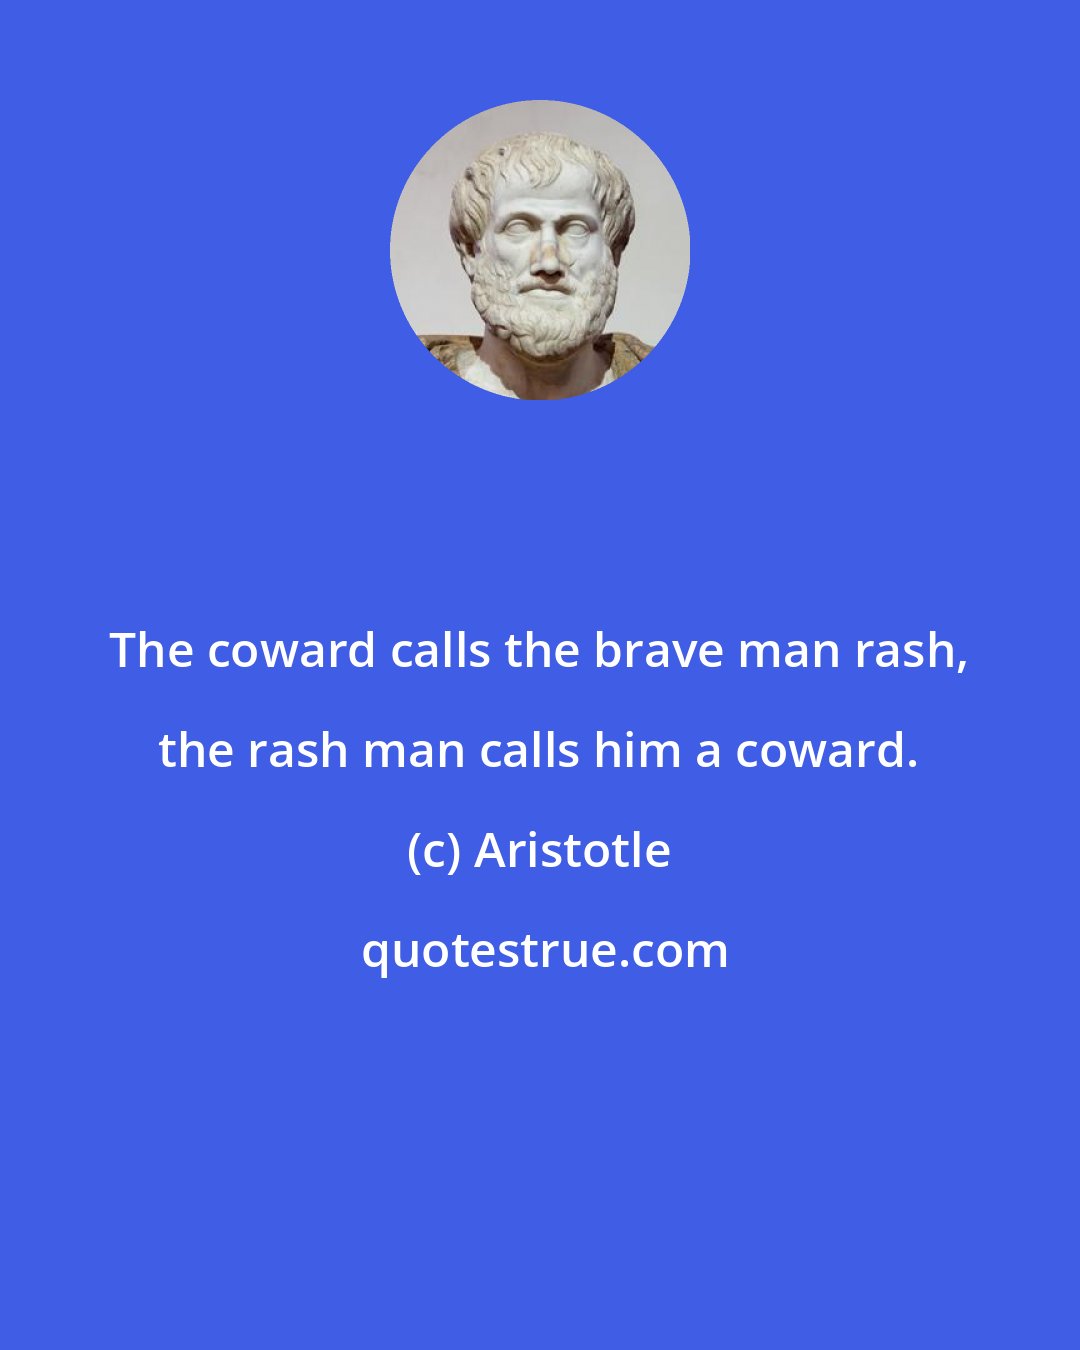 Aristotle: The coward calls the brave man rash, the rash man calls him a coward.